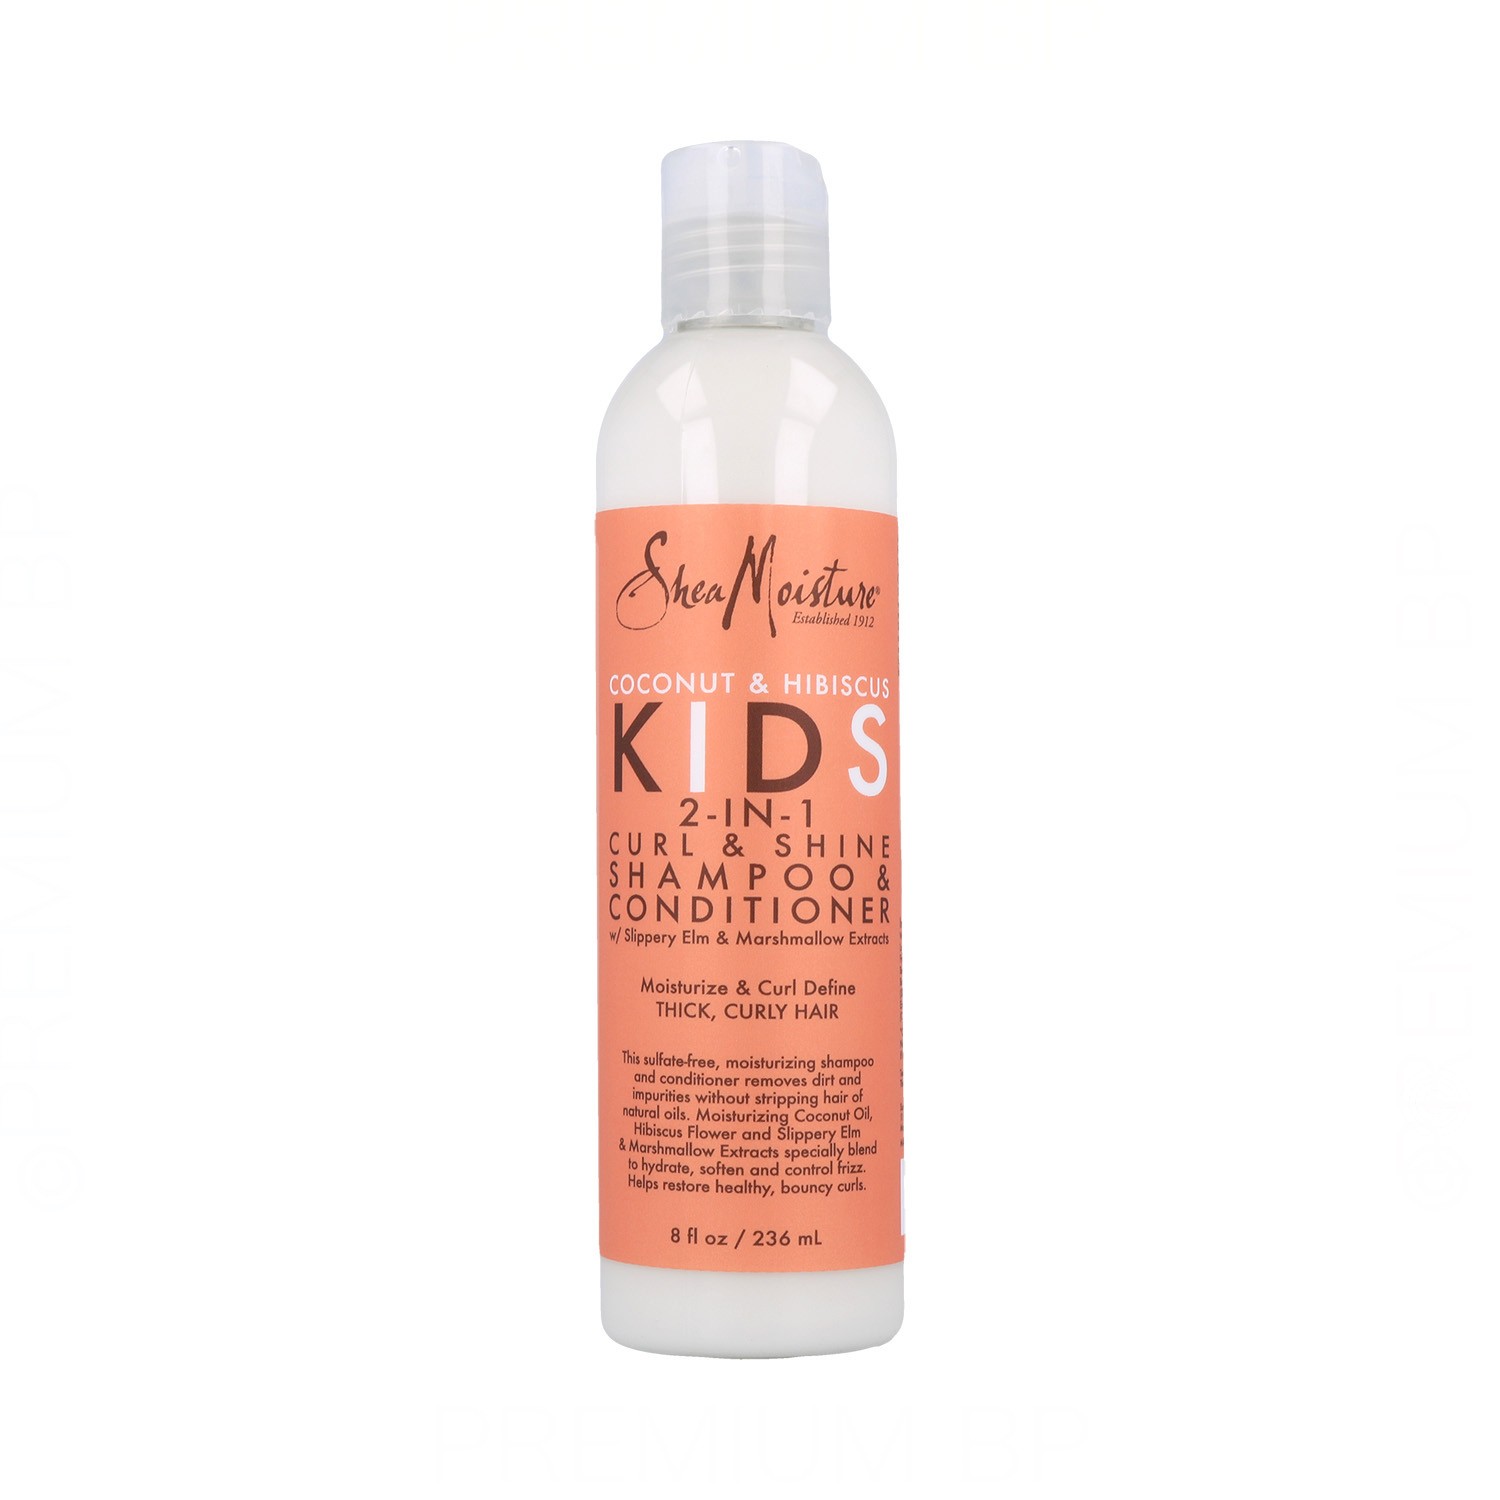 Shea Moisture Coconut & Hibiscus Kids 2-In-1 Shampoo & Conditioner 8Oz/236 ml